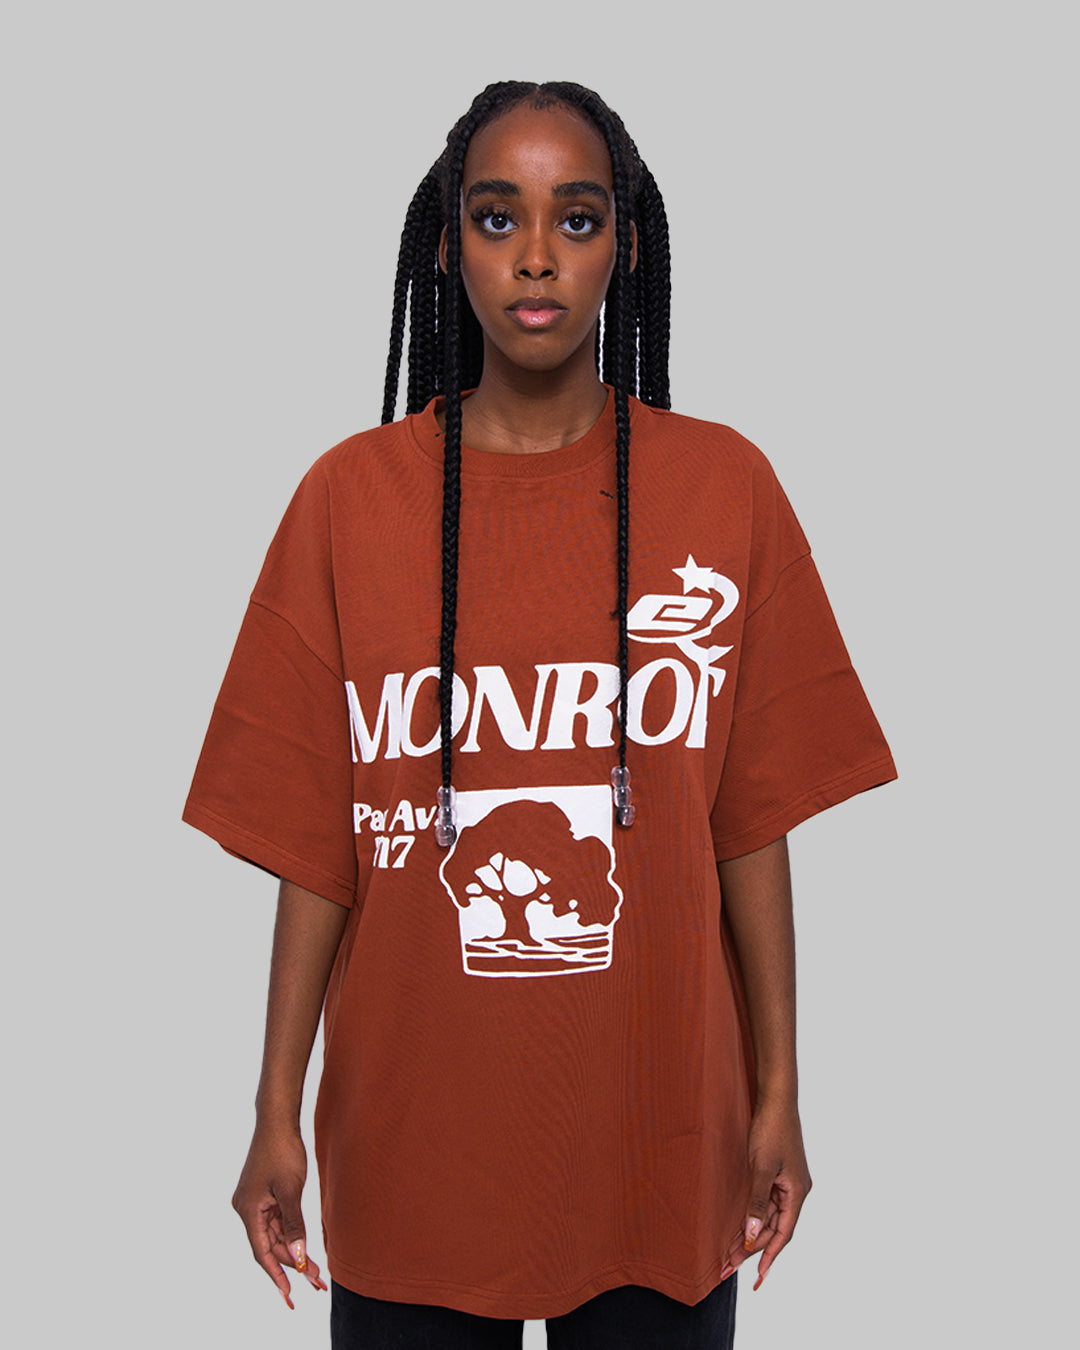 Monroe T-Shirt Brown